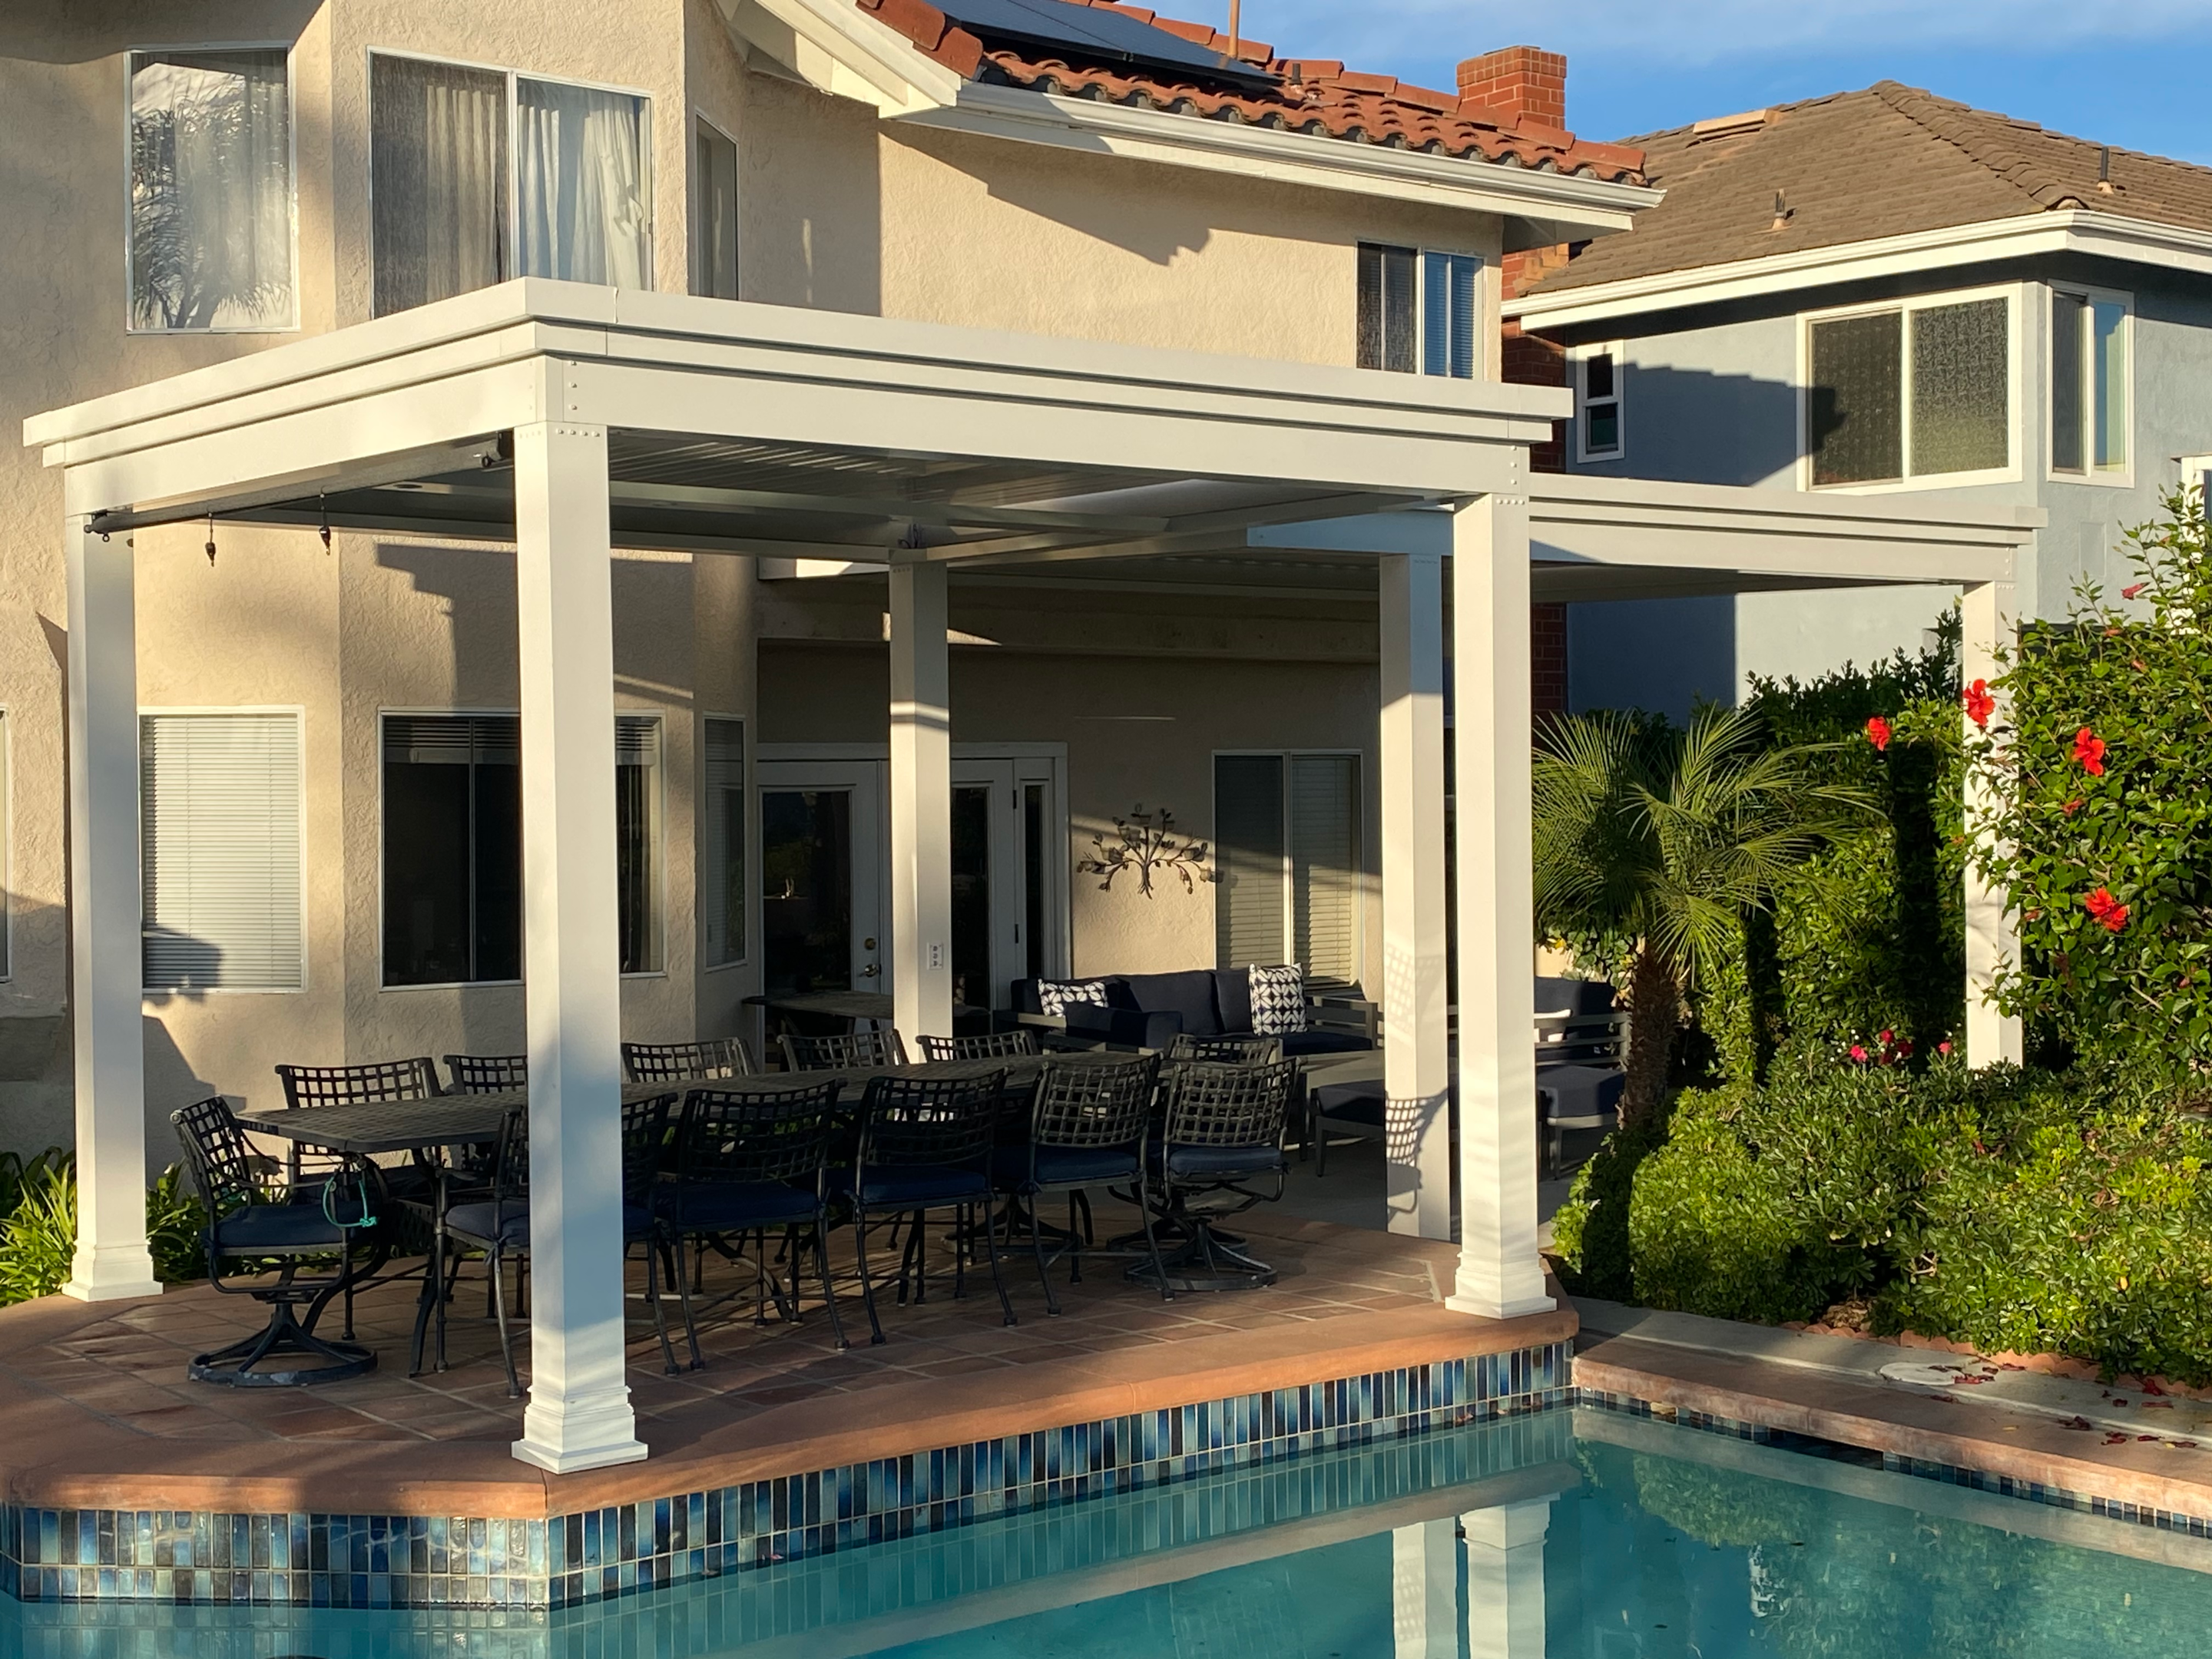 Luxurious poolside pergola with elegant design and seating area